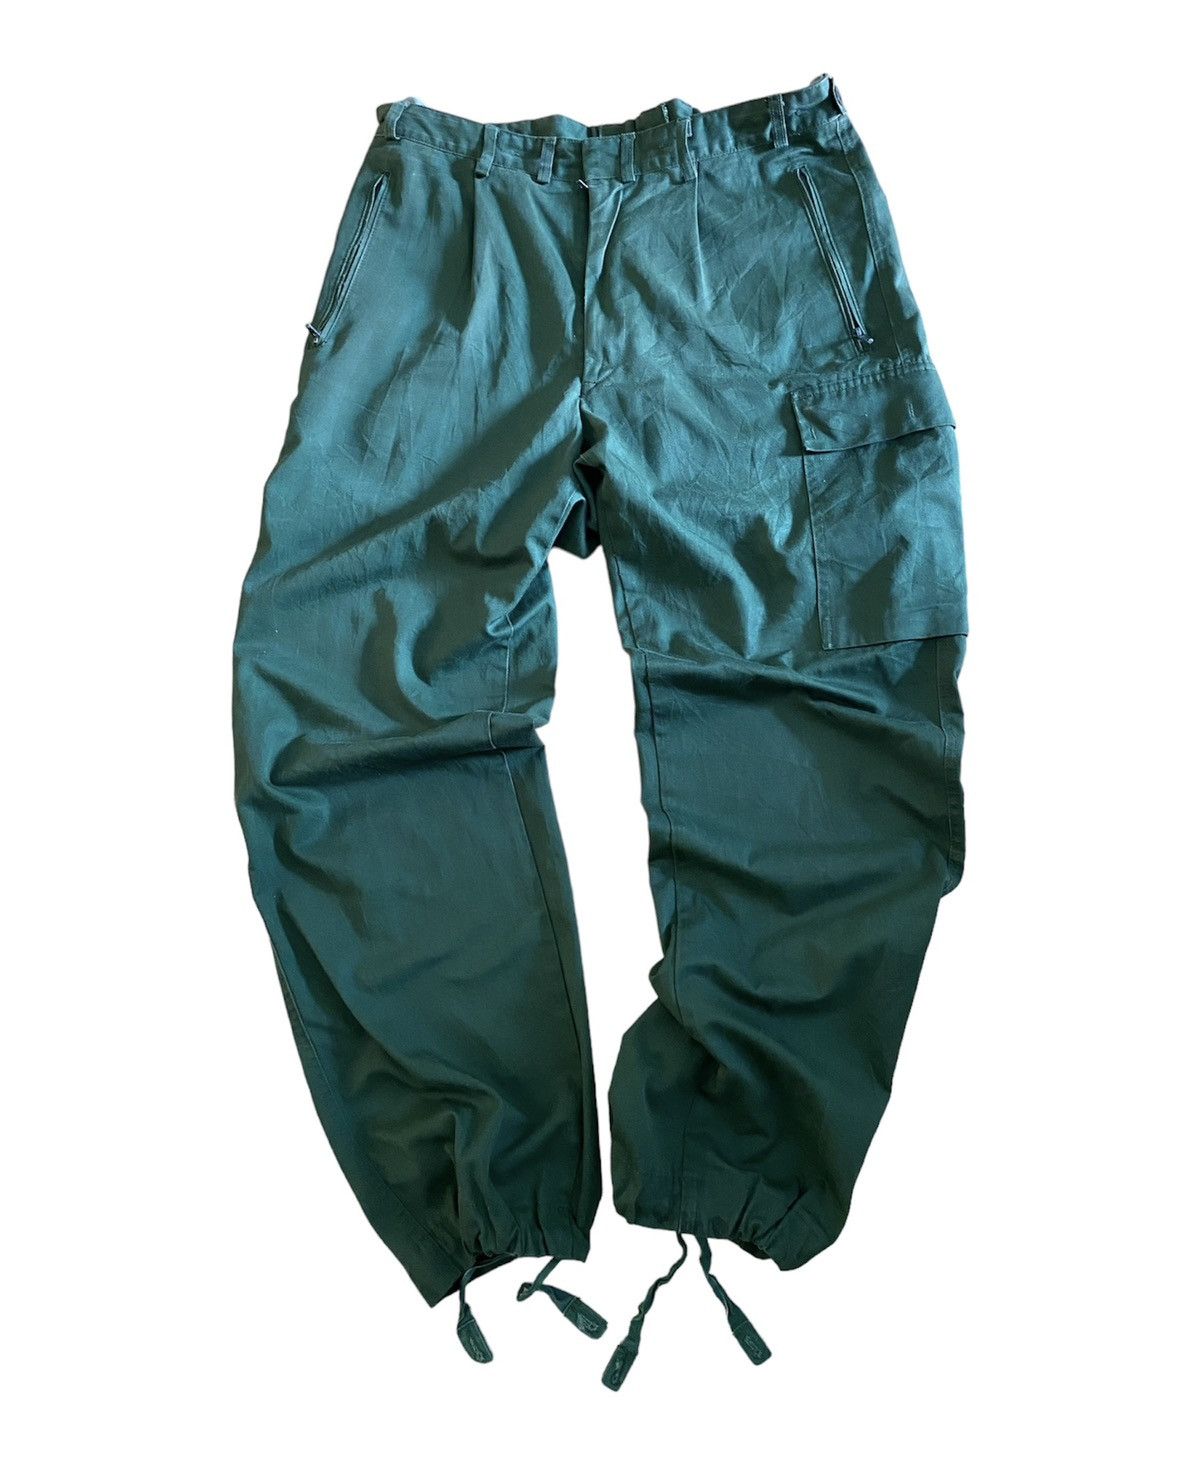 Vintage 1880s Germany Military BUND Wolfhagener Kleiderfabrik pants Size US 34 / EU 50 - 1 Preview